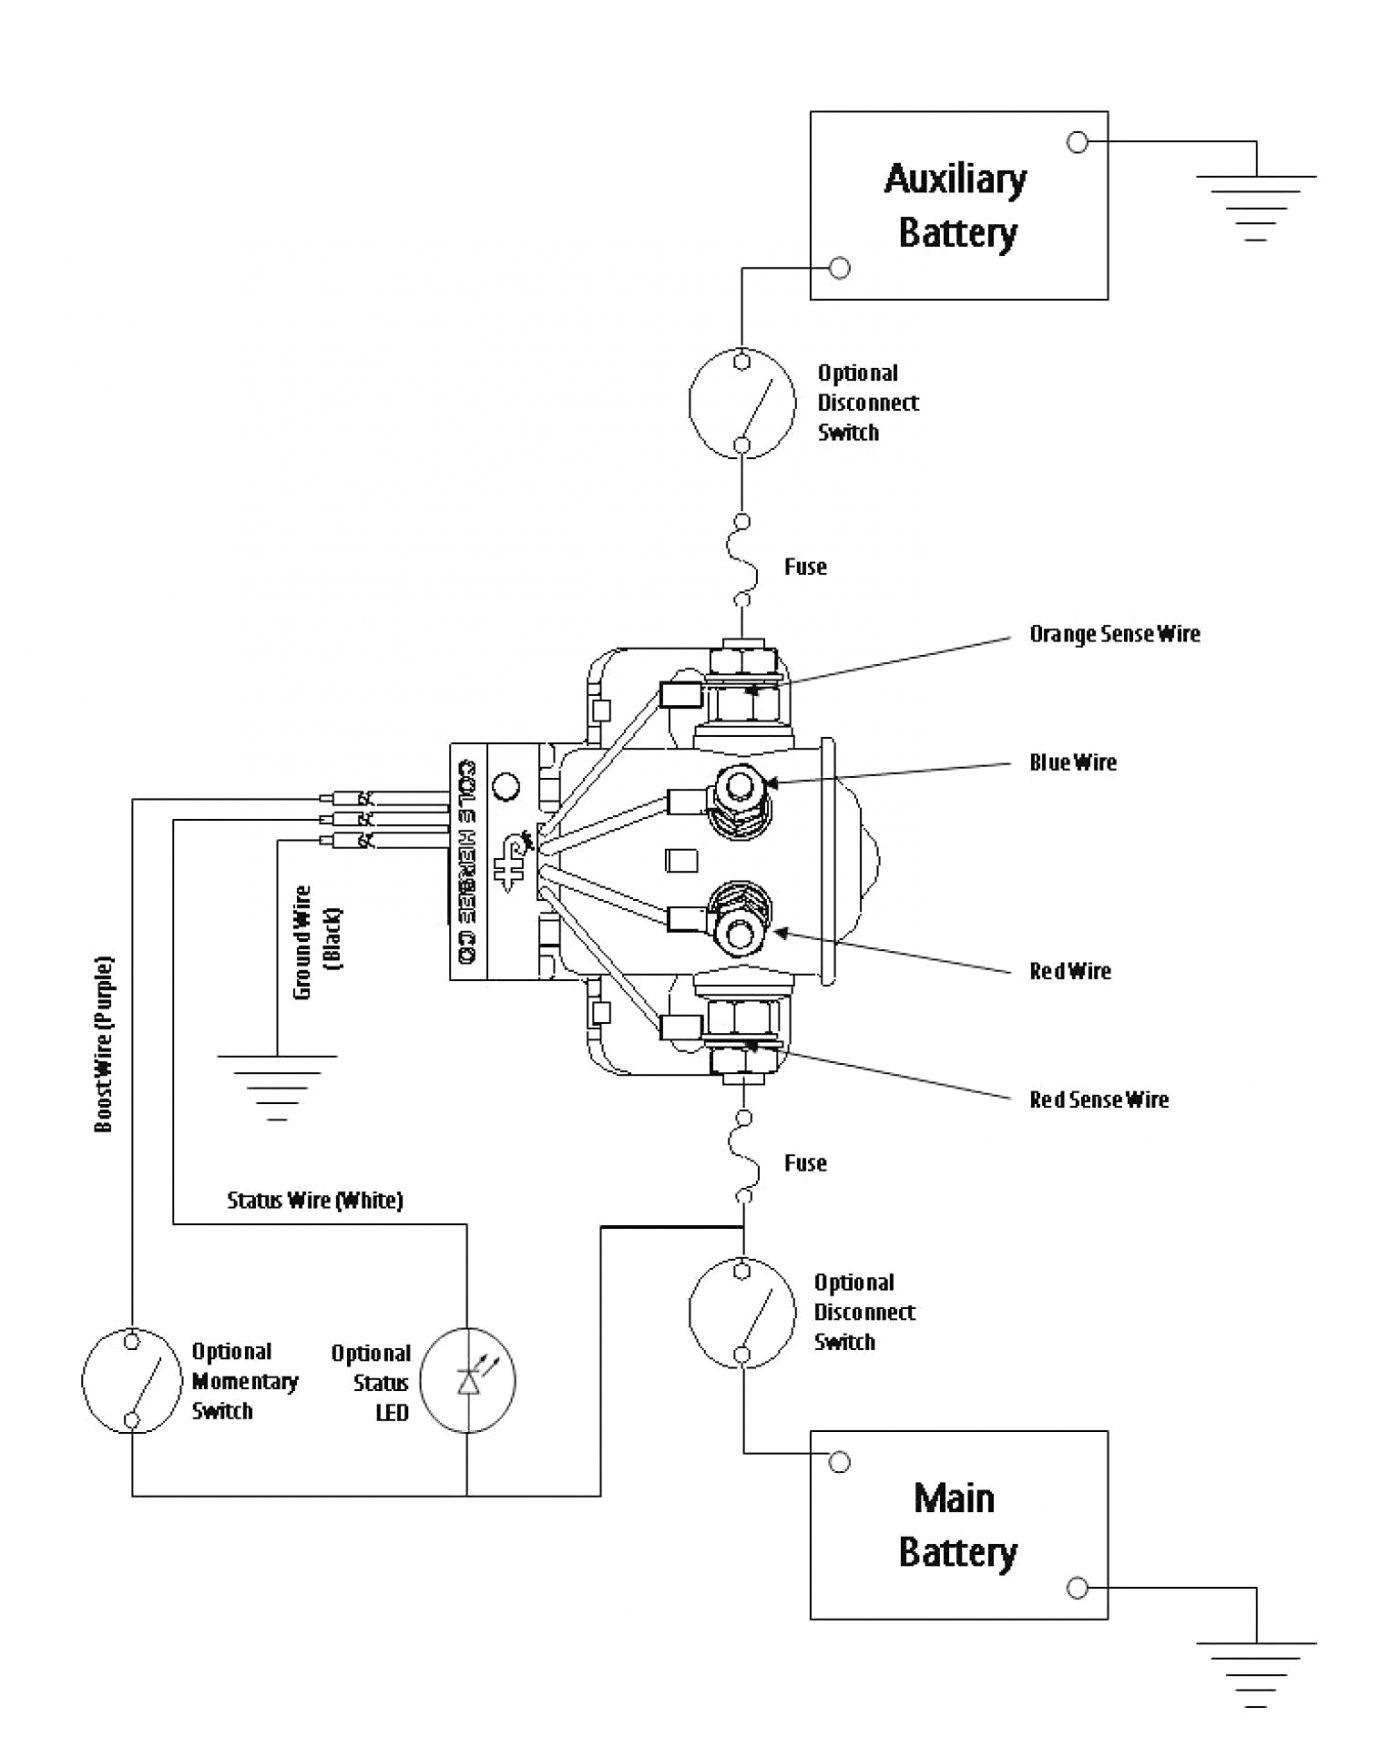 Truck Parts Diagram Garmin Wiring Diagram List 2003 Chevy Tahoe Parts Diagram Queen Of Truck Parts Diagram